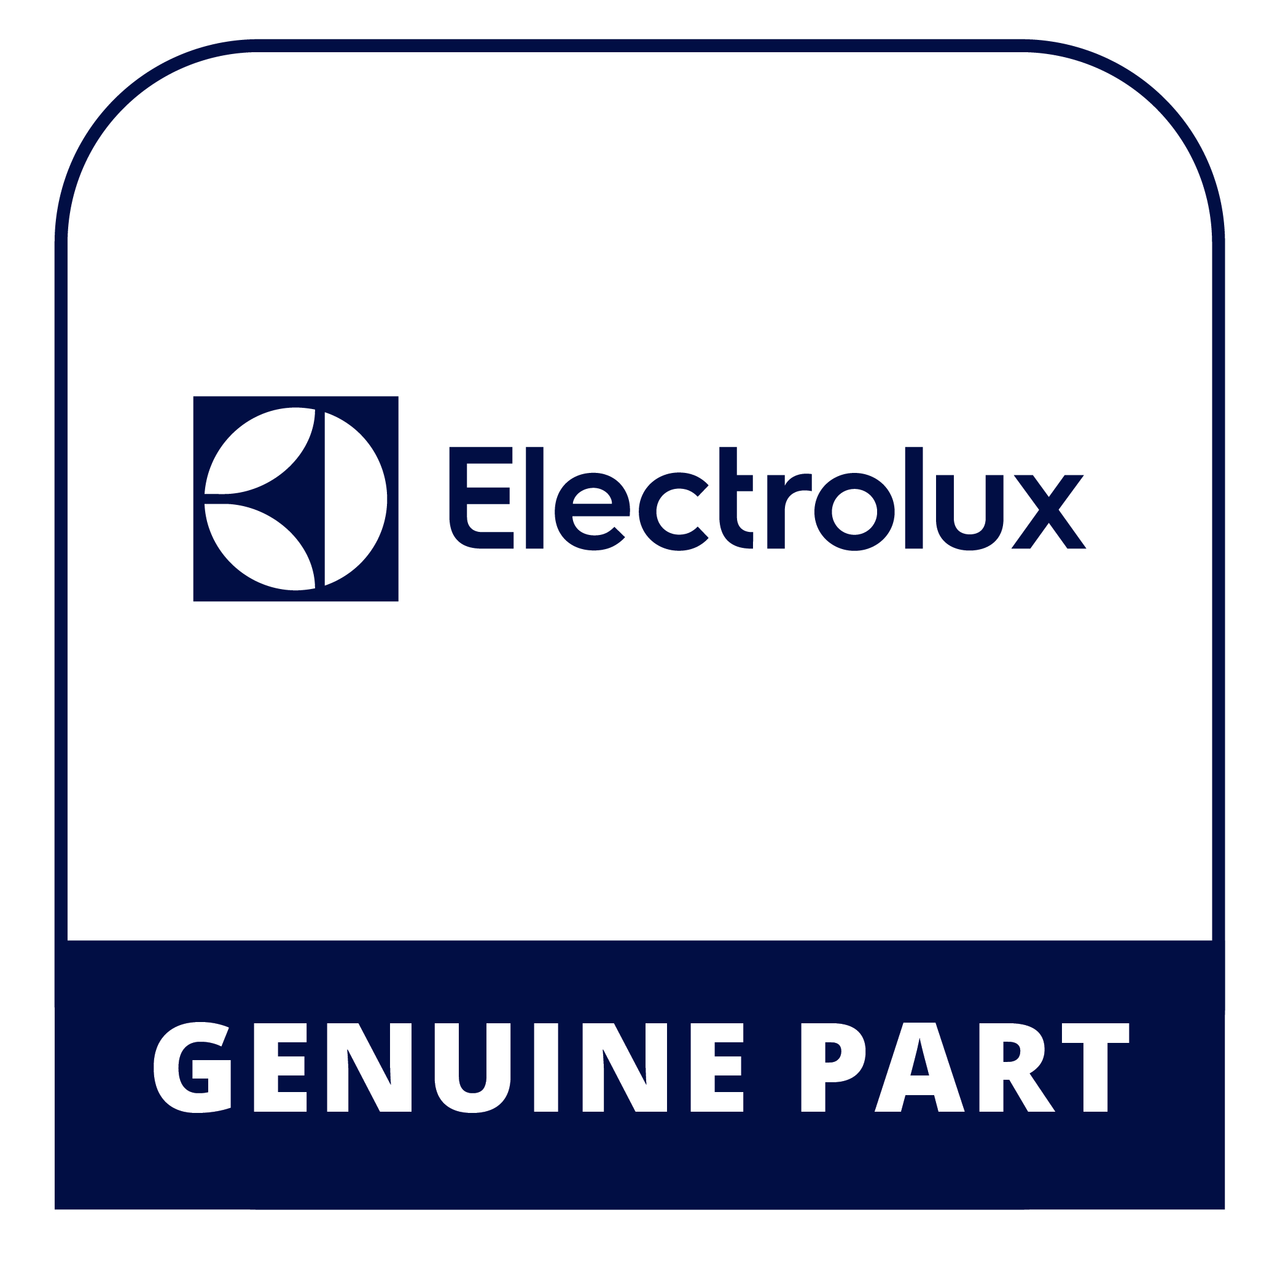 Frigidaire - Electrolux 318053901 Gasket - Genuine Electrolux Part